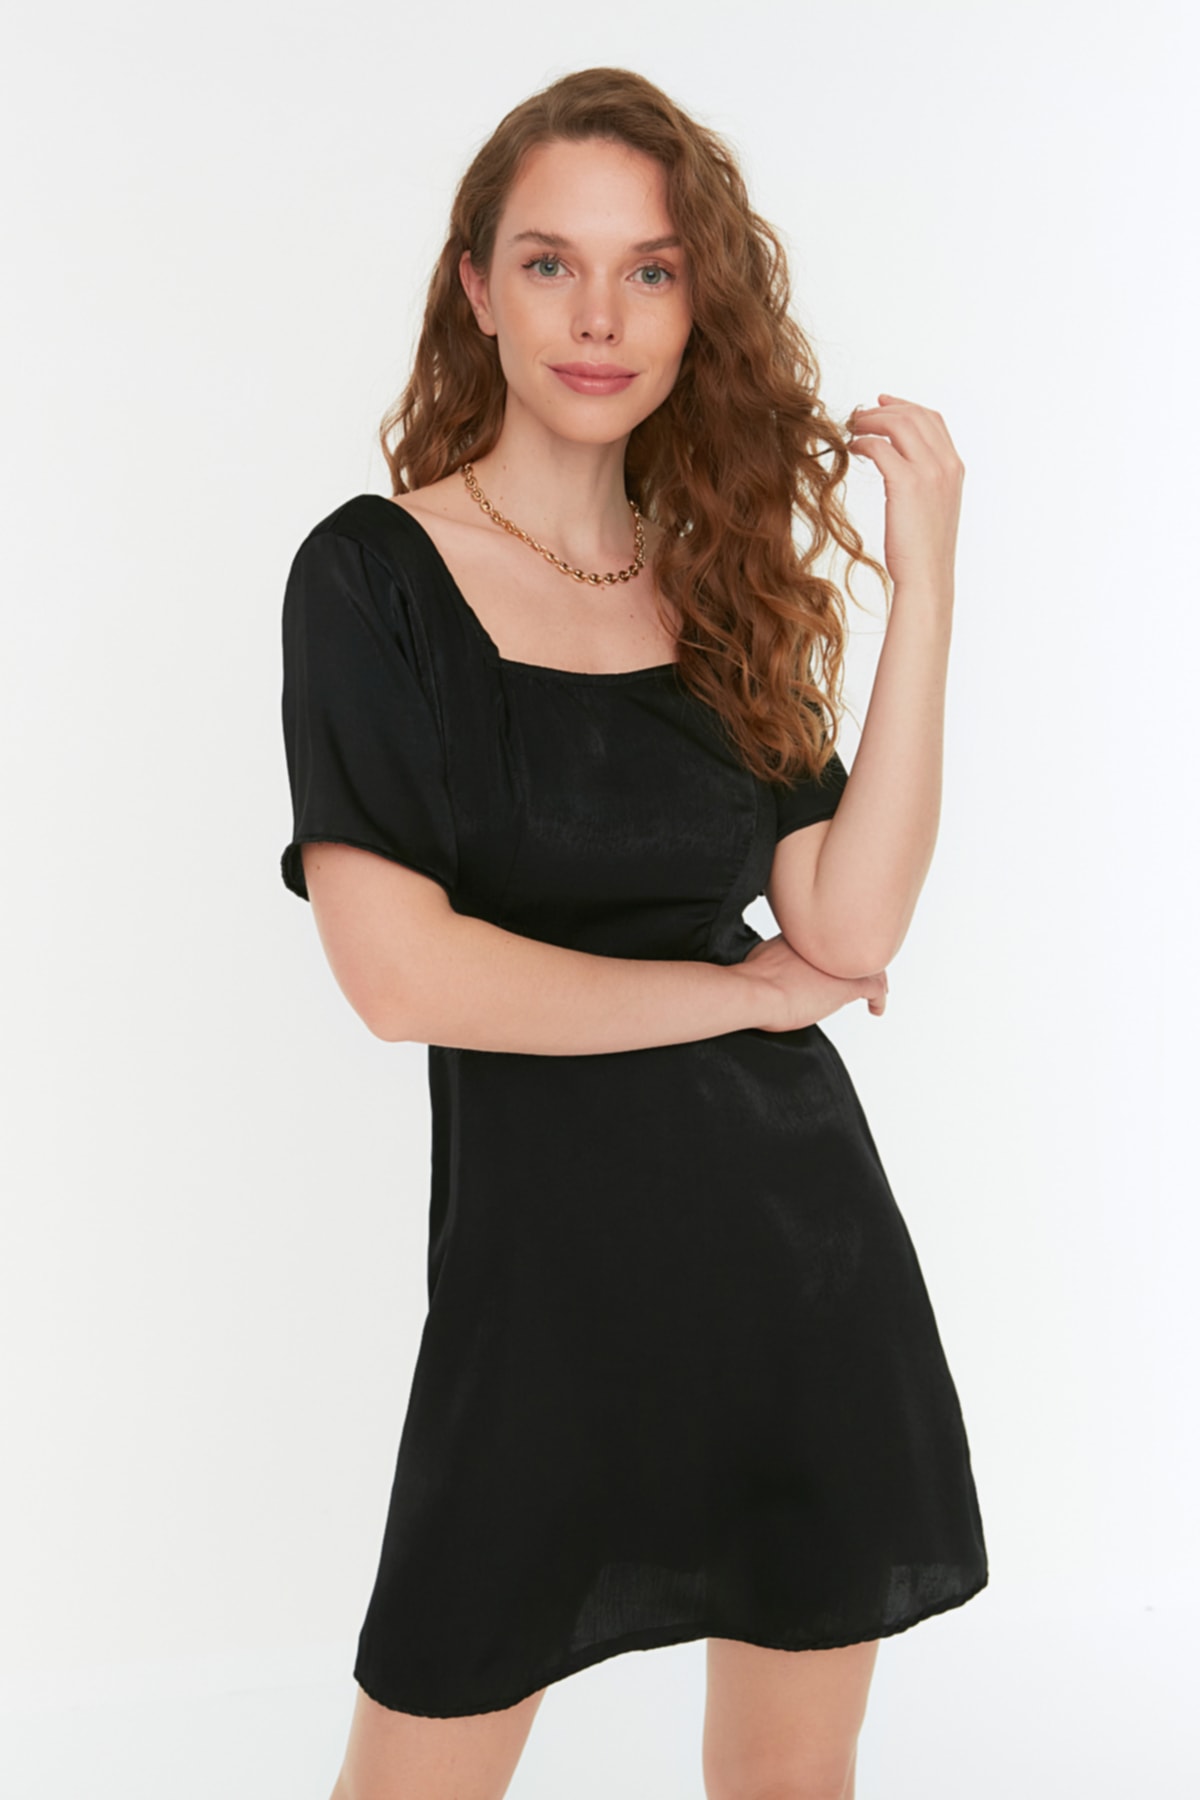 Trendyol Black Square Collar Dress